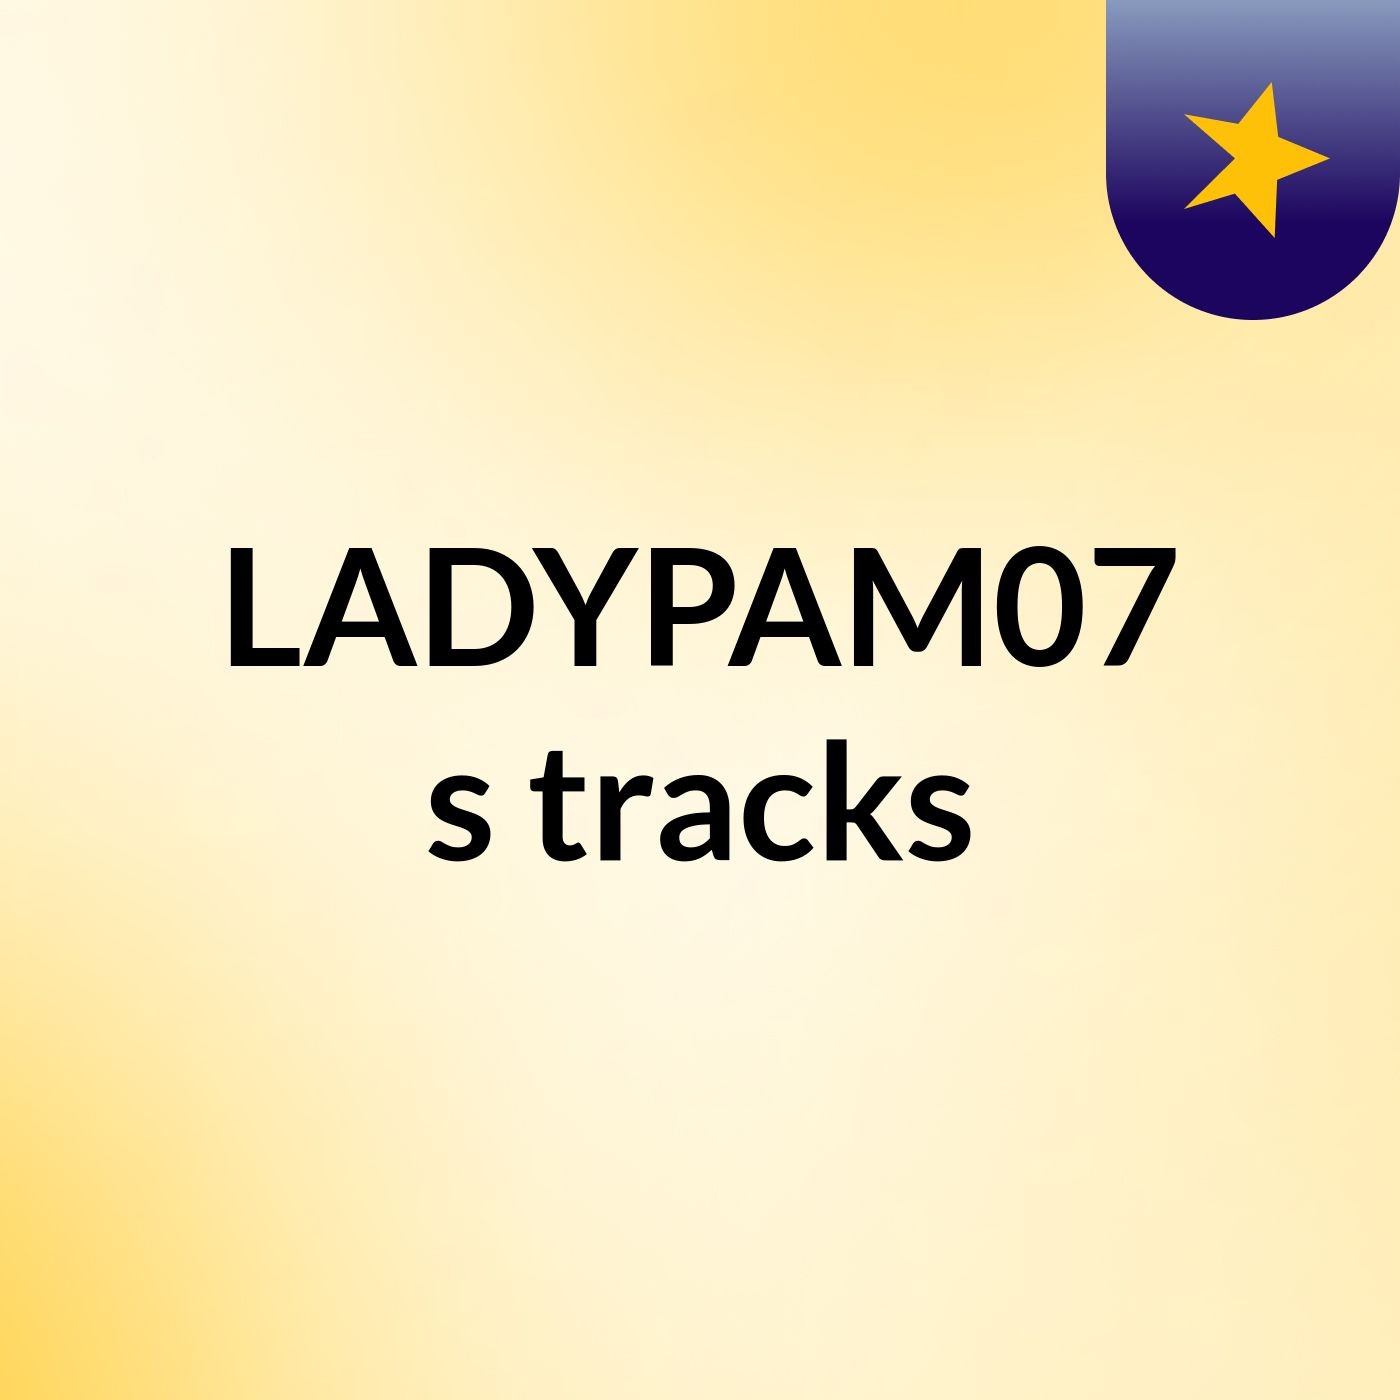 LADYPAM07's tracks